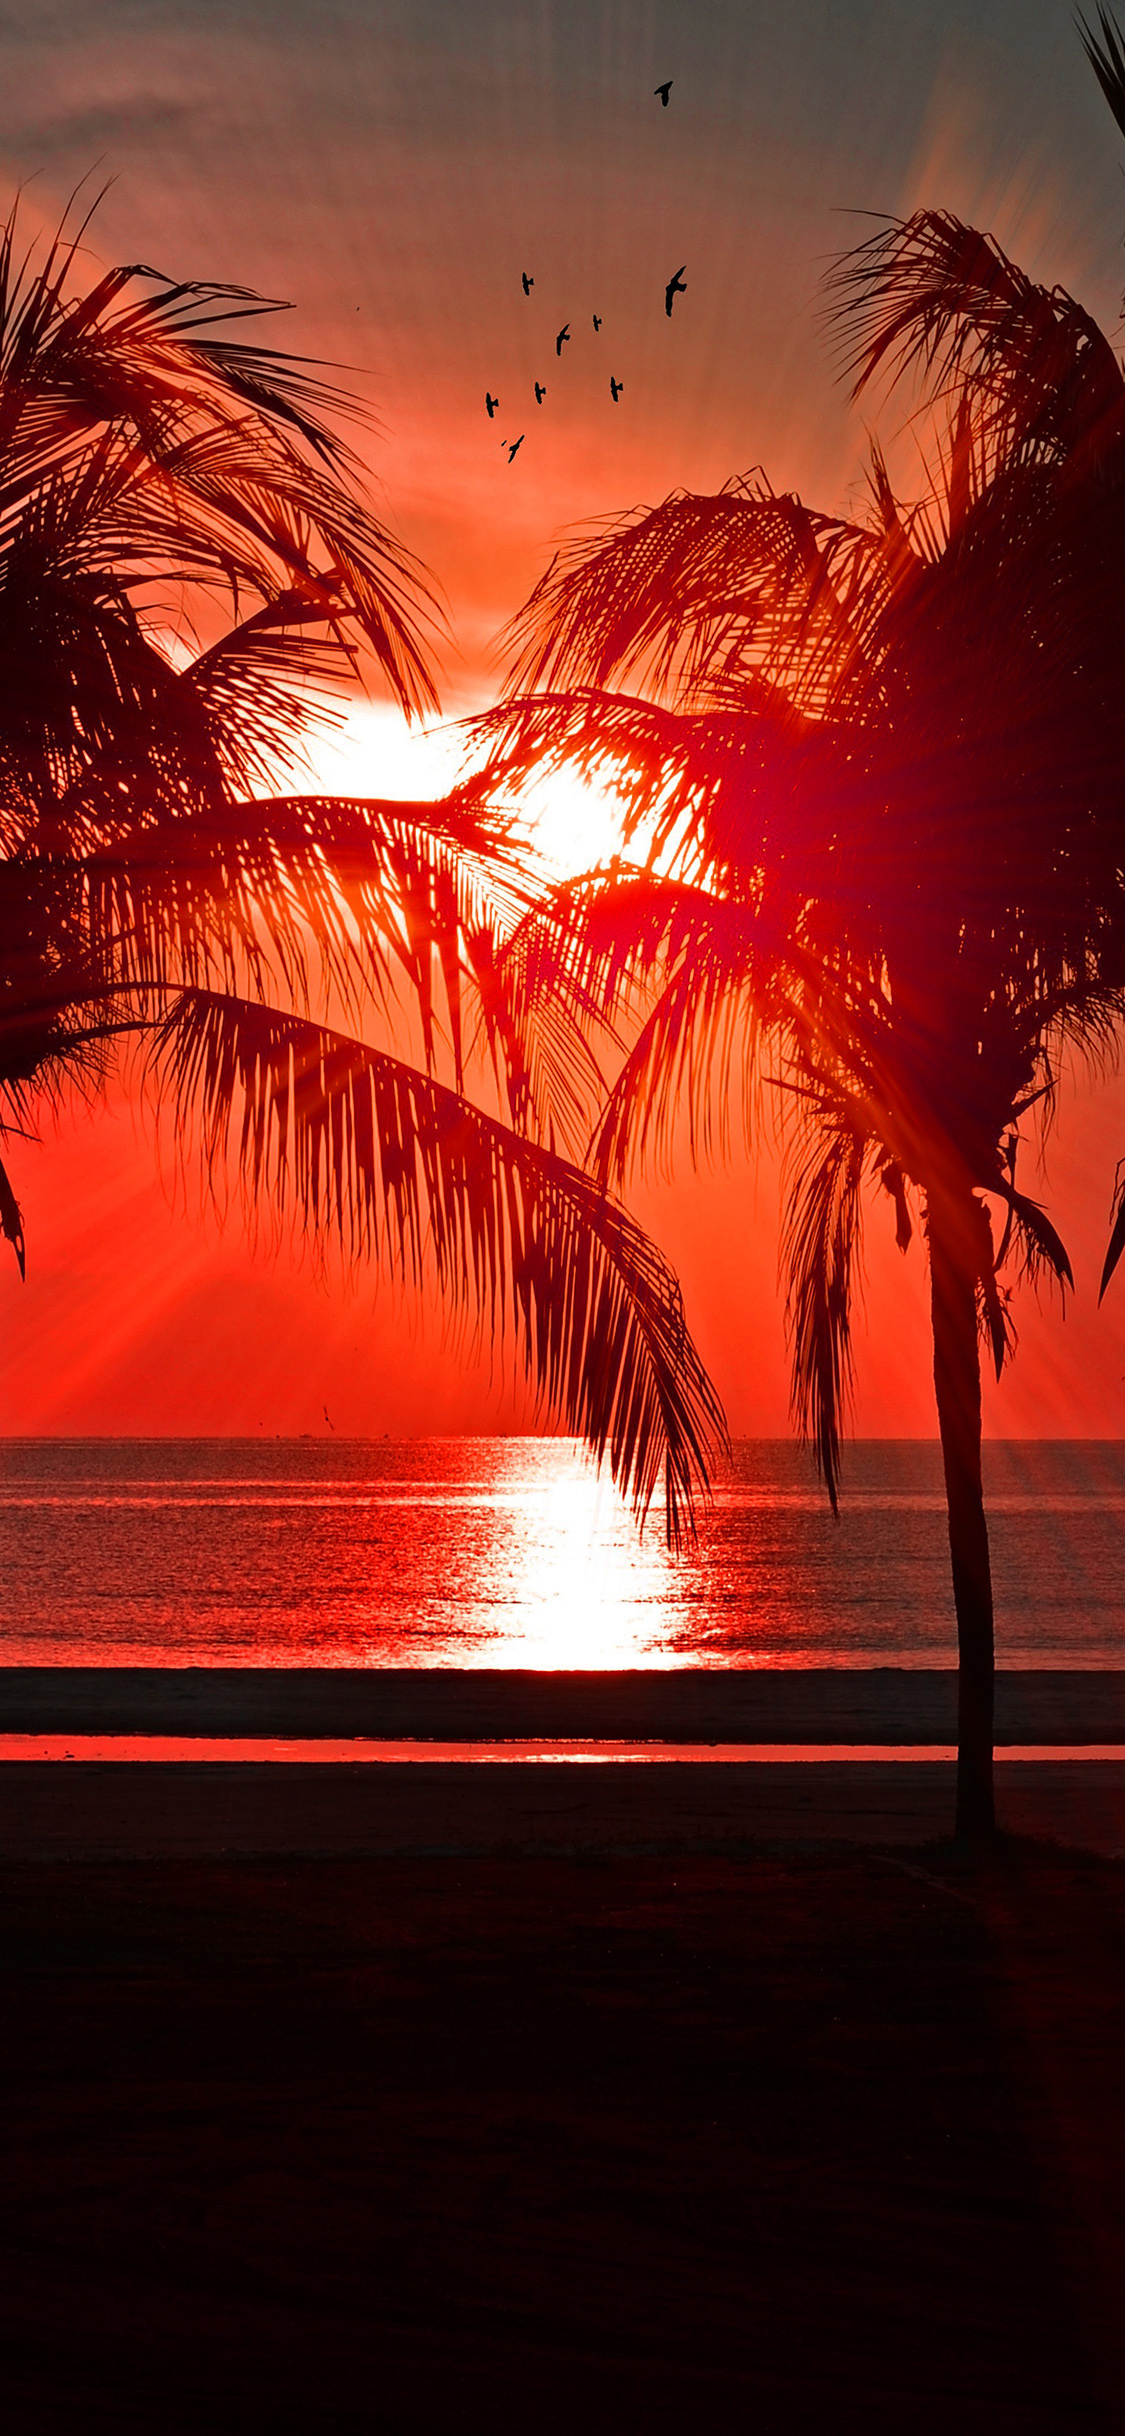 iPhone X wallpaper. beach vacation summer night sunset red palm tree dark